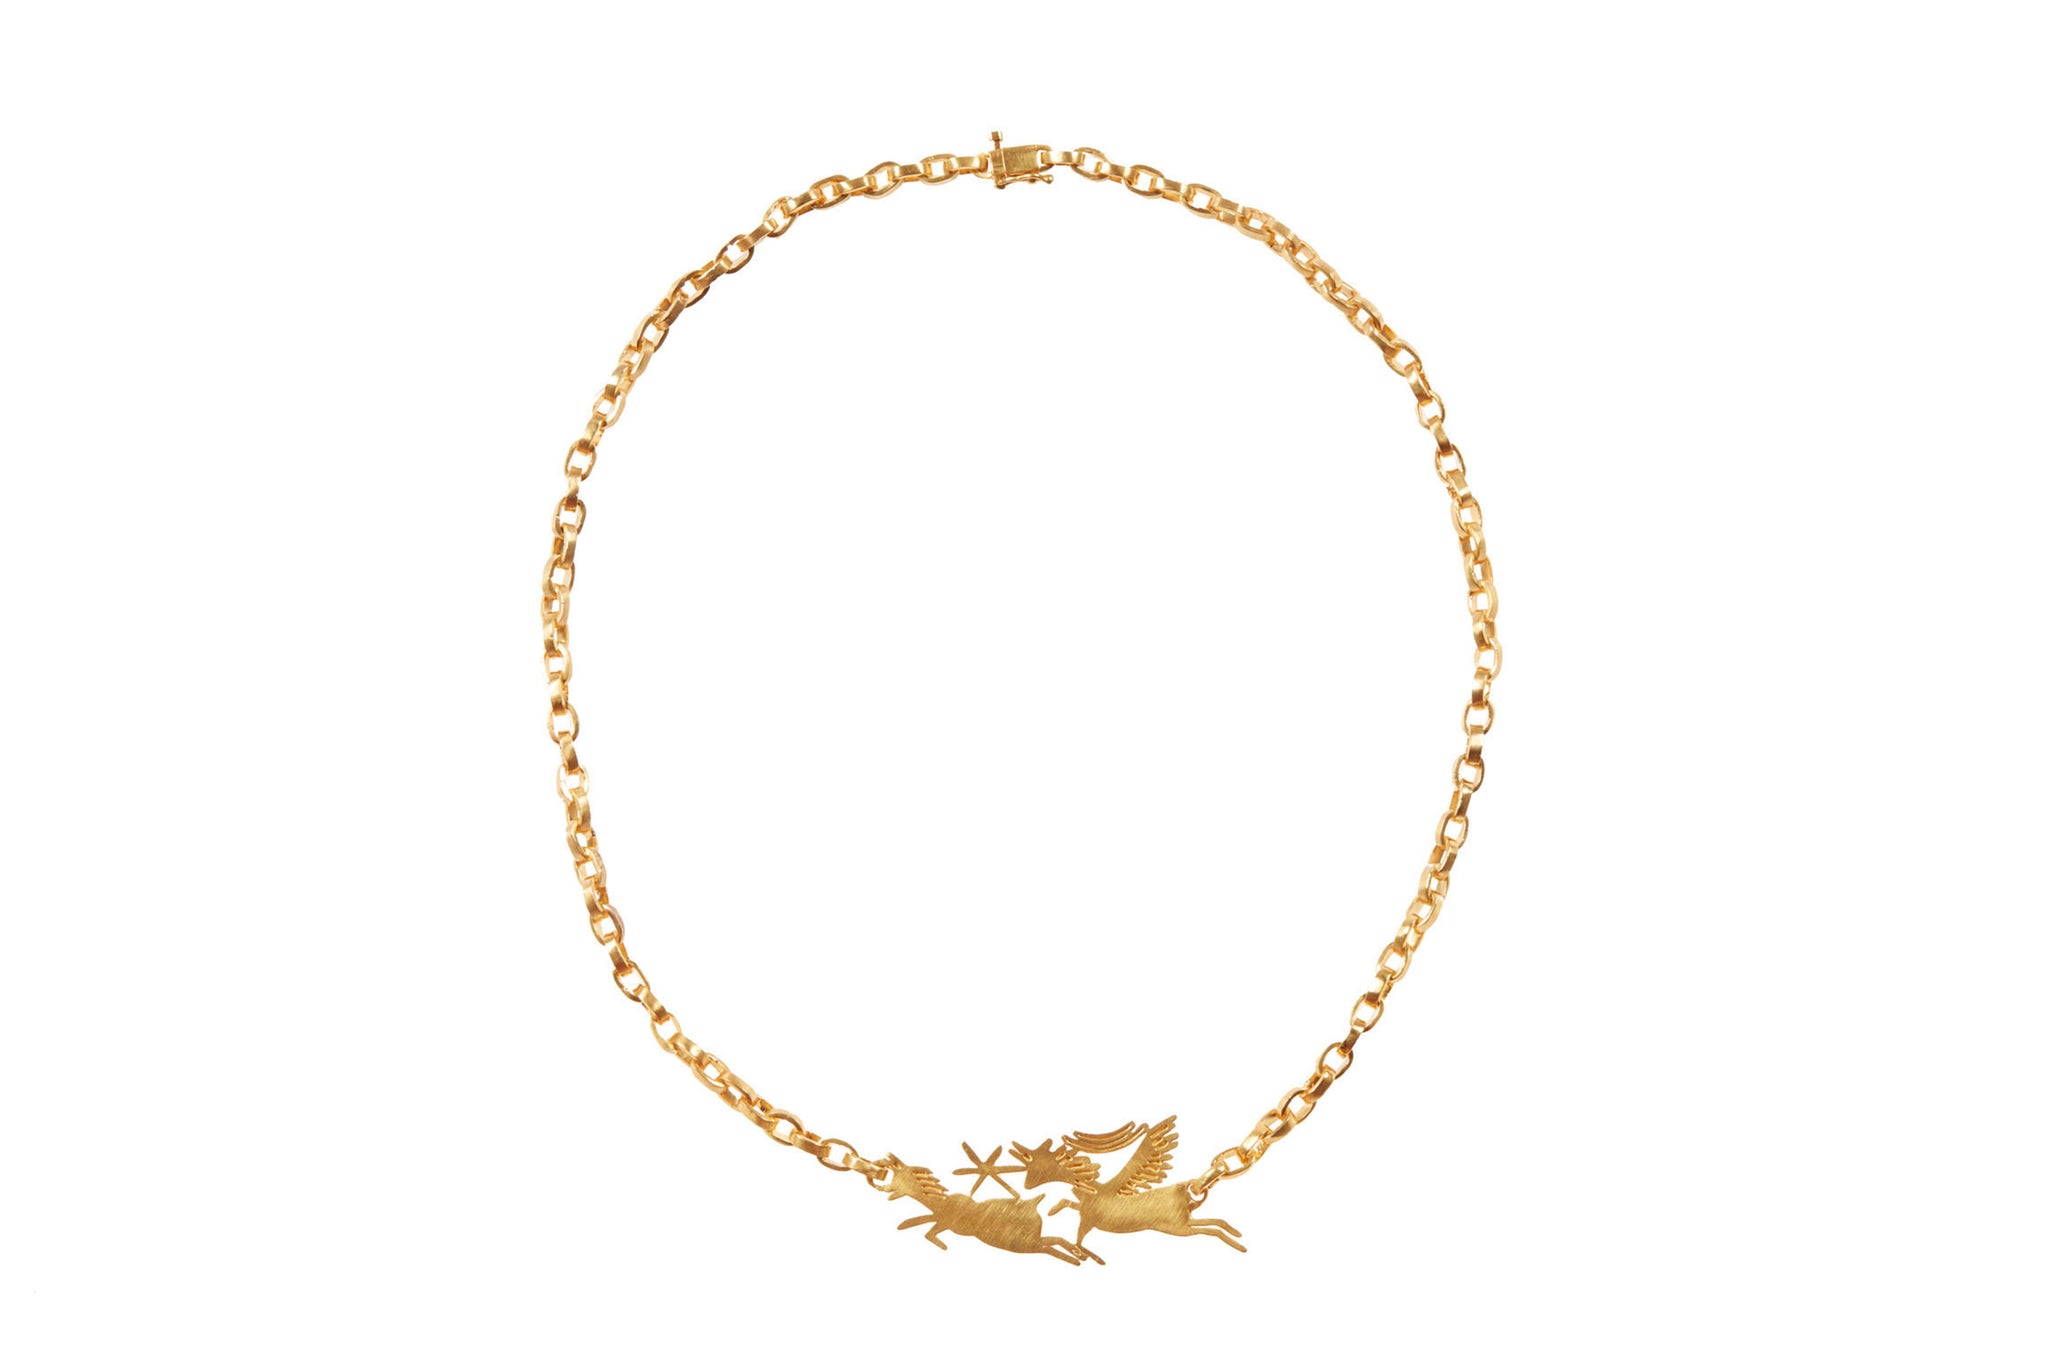 darius jewels hand made fine jewelry lovers necklace signature link chain pegasus star 18k yellow gold darius khonsary